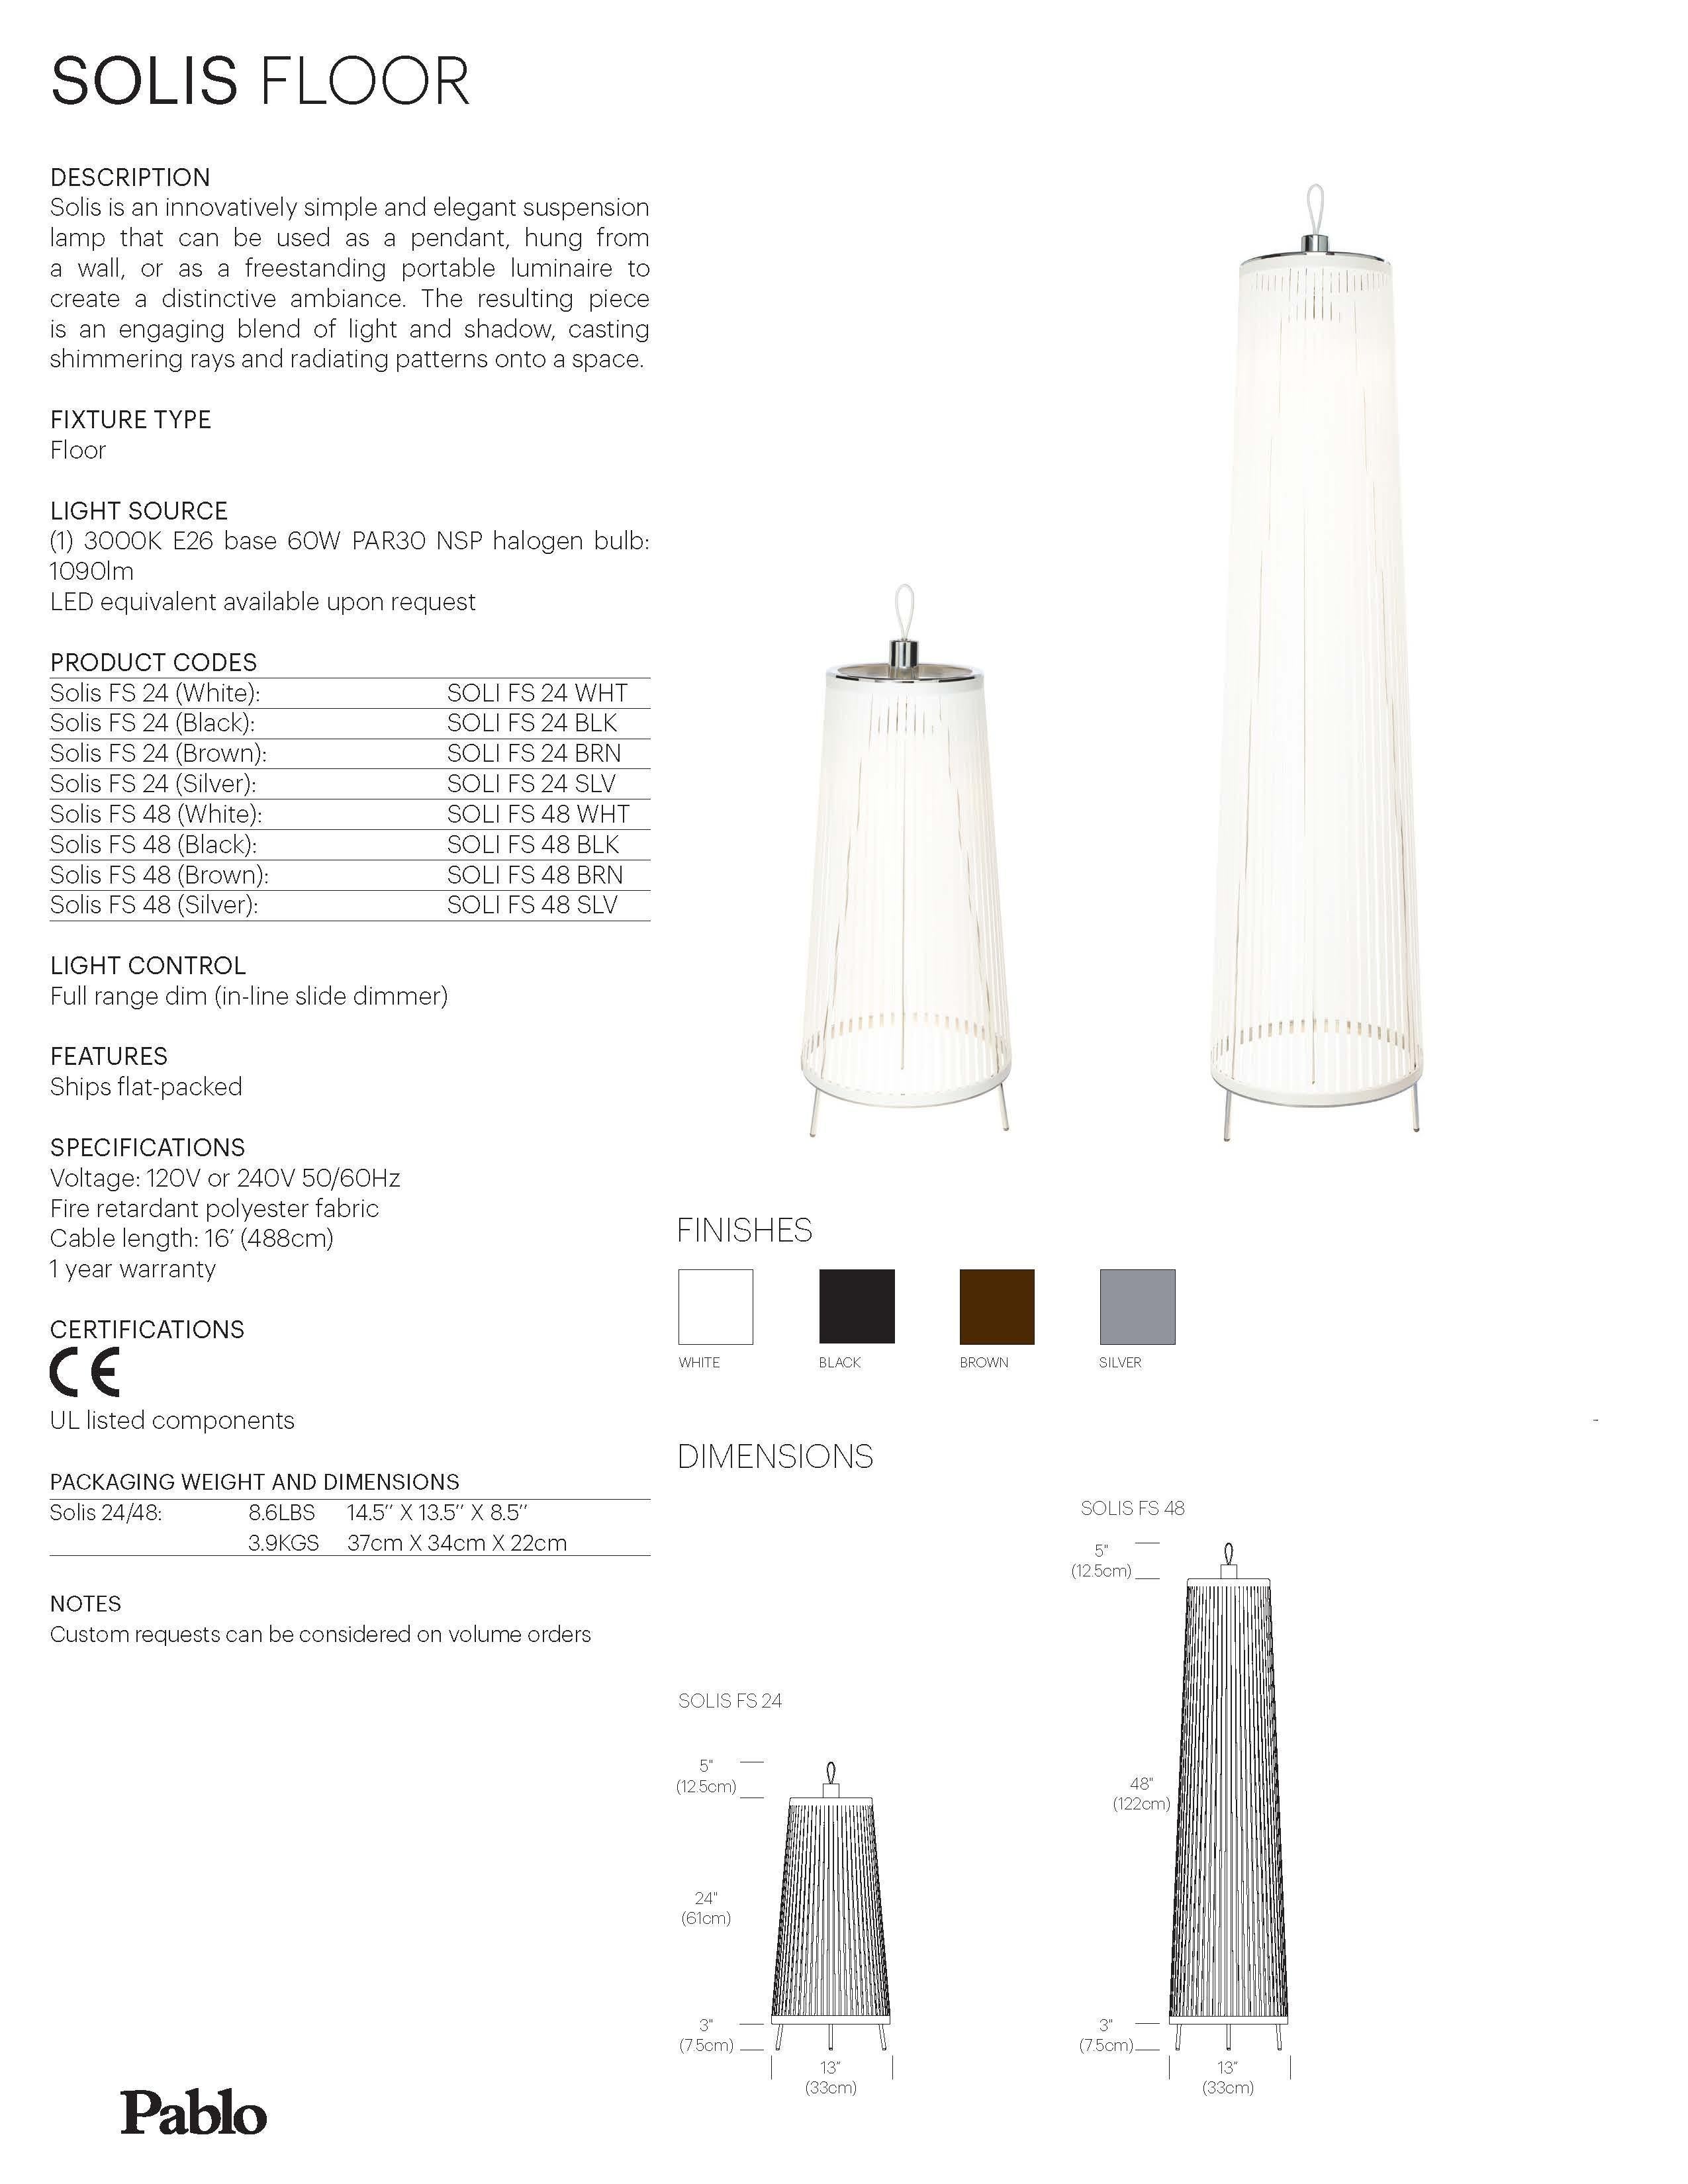 Solis 24 Freestanding Lamp in Brown by Pablo Designs (amerikanisch)